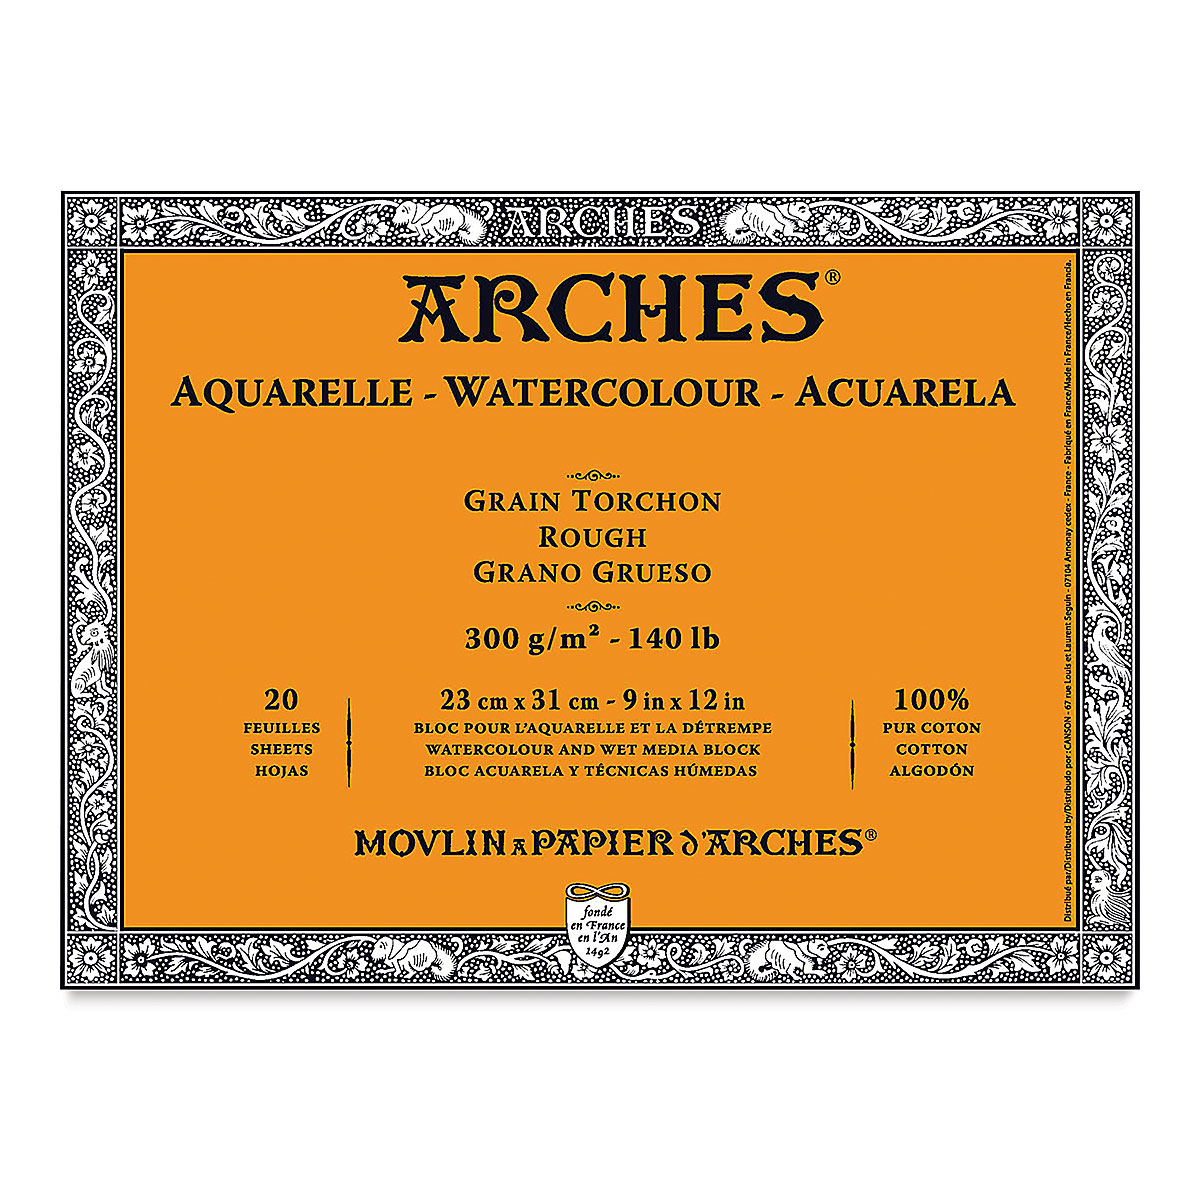 Arches Watercolor Block - 9 x 12, 300 lb, Cold Press, 10 Sheets